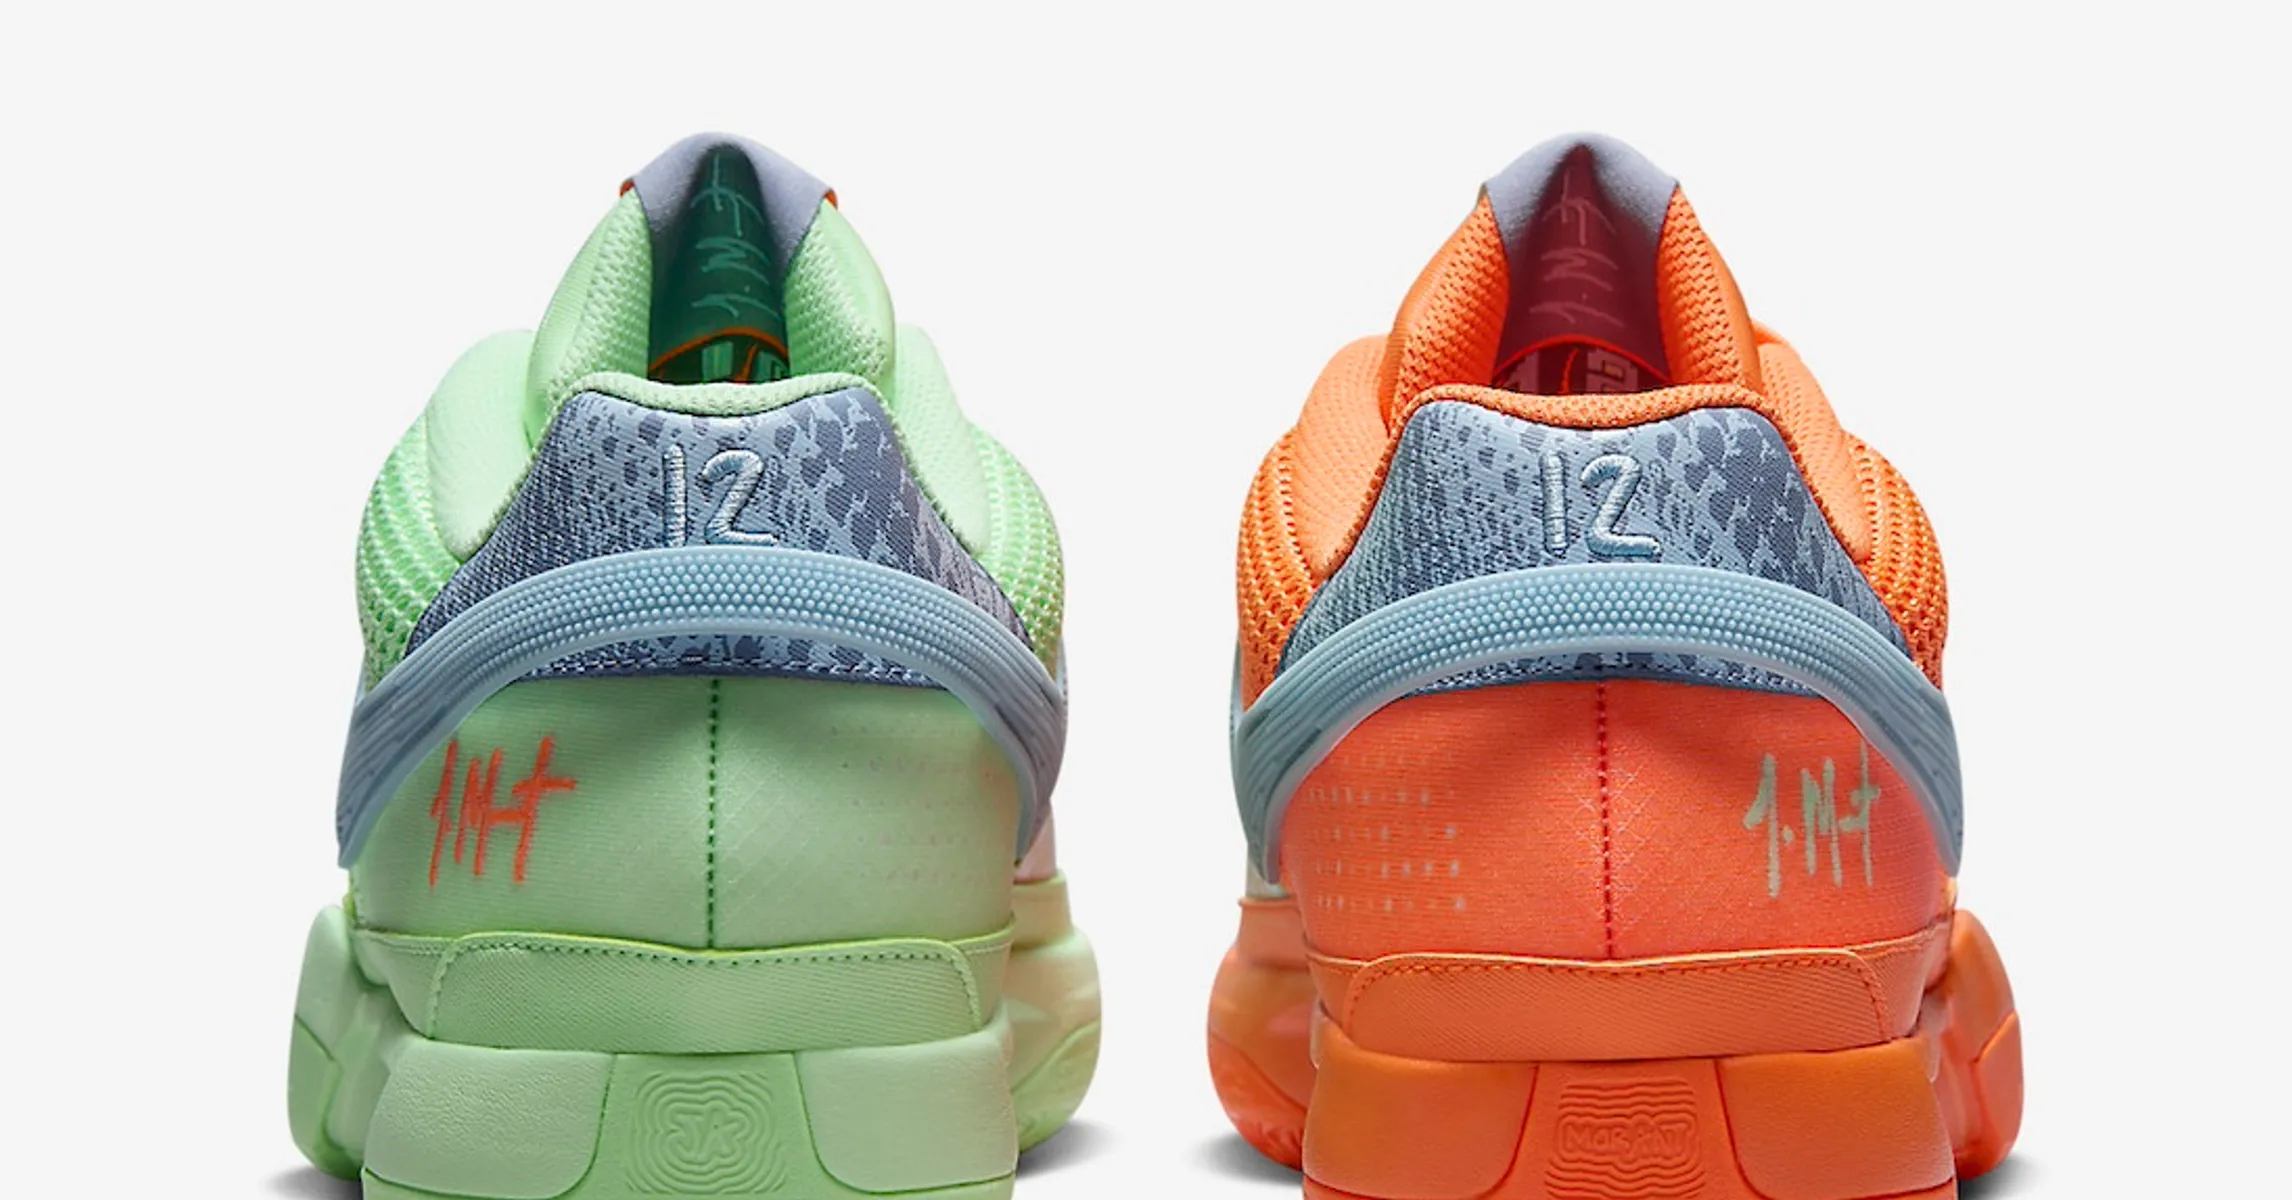 Nike Ja 1 “Bright Mandarin/Vapor Green” Official Photos Revealed